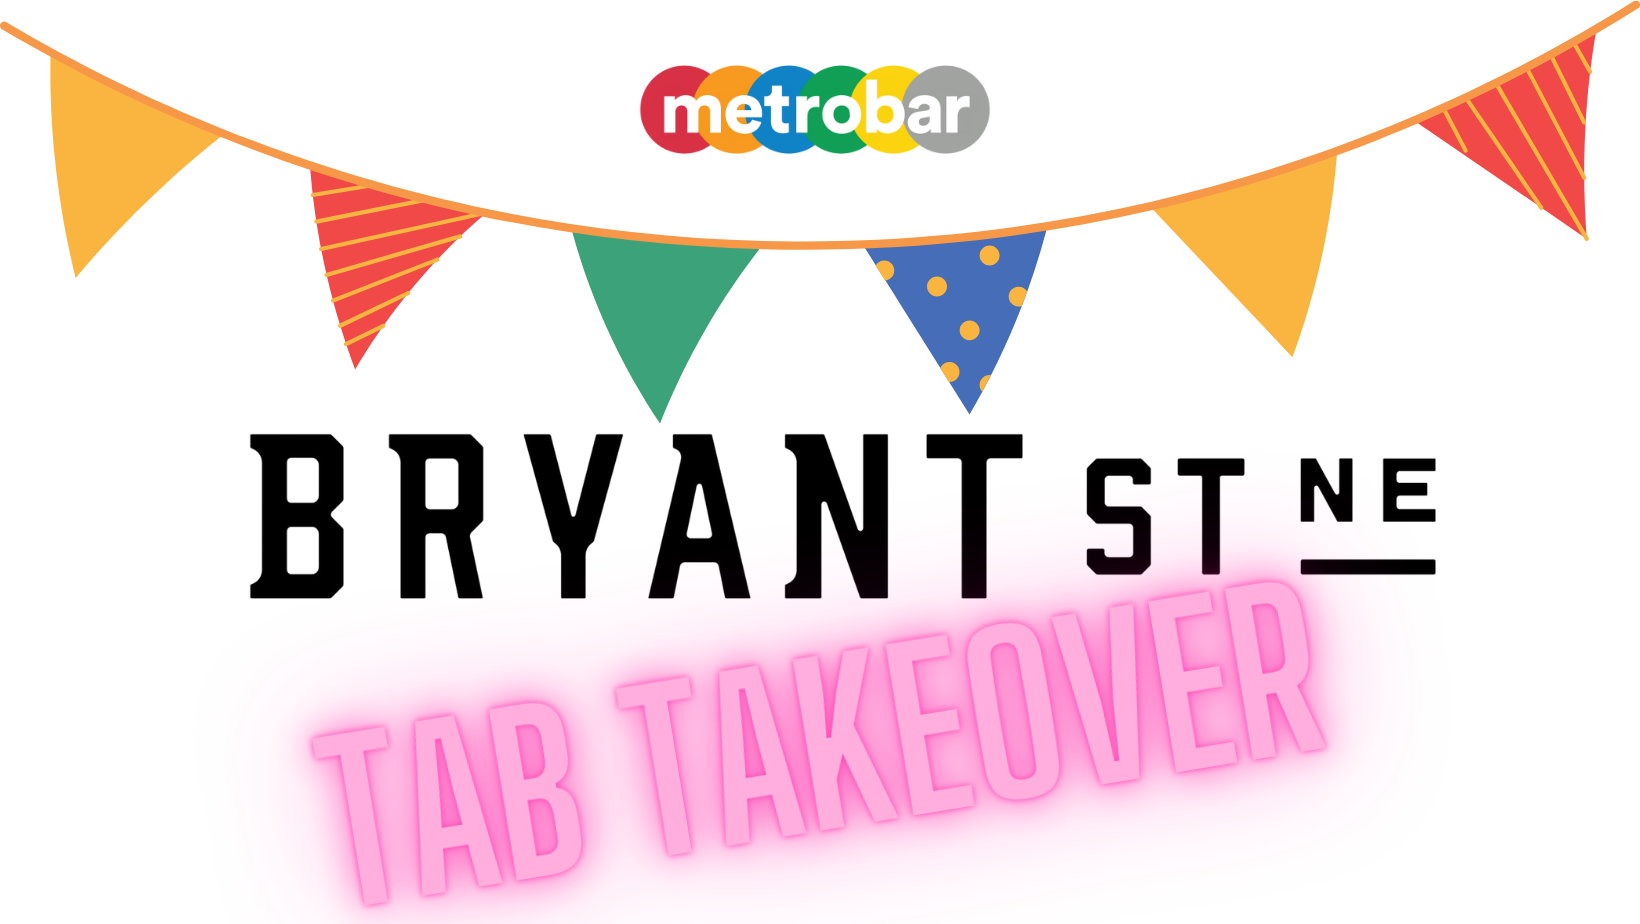 Bryant Street Tab Takeover